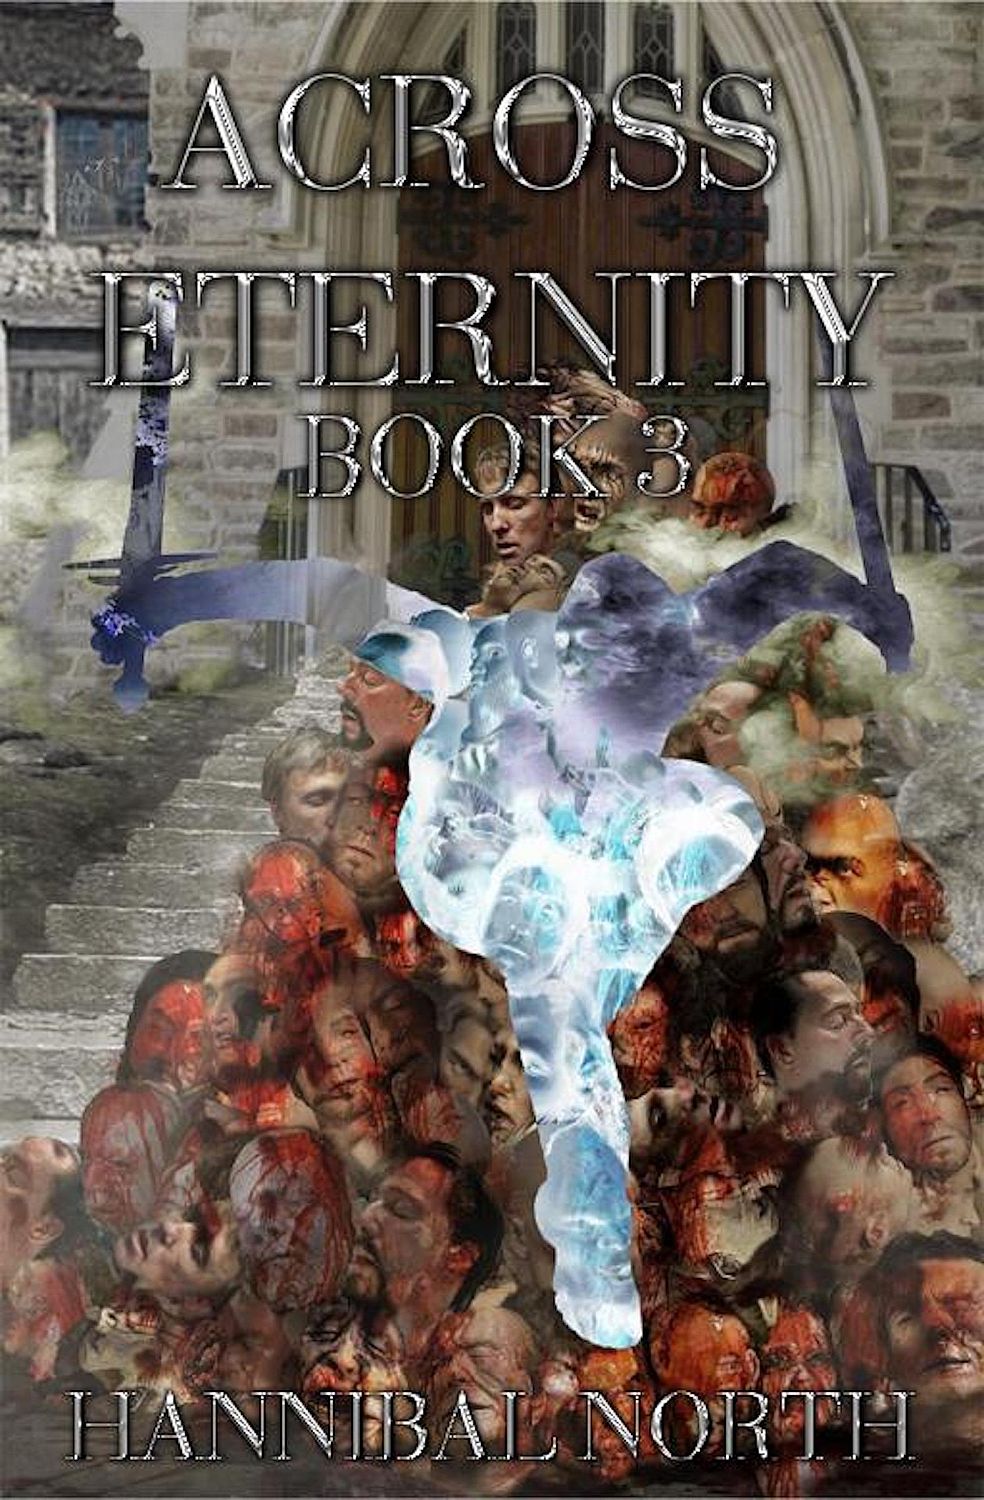 Across Eternity: Book 3 - Cover